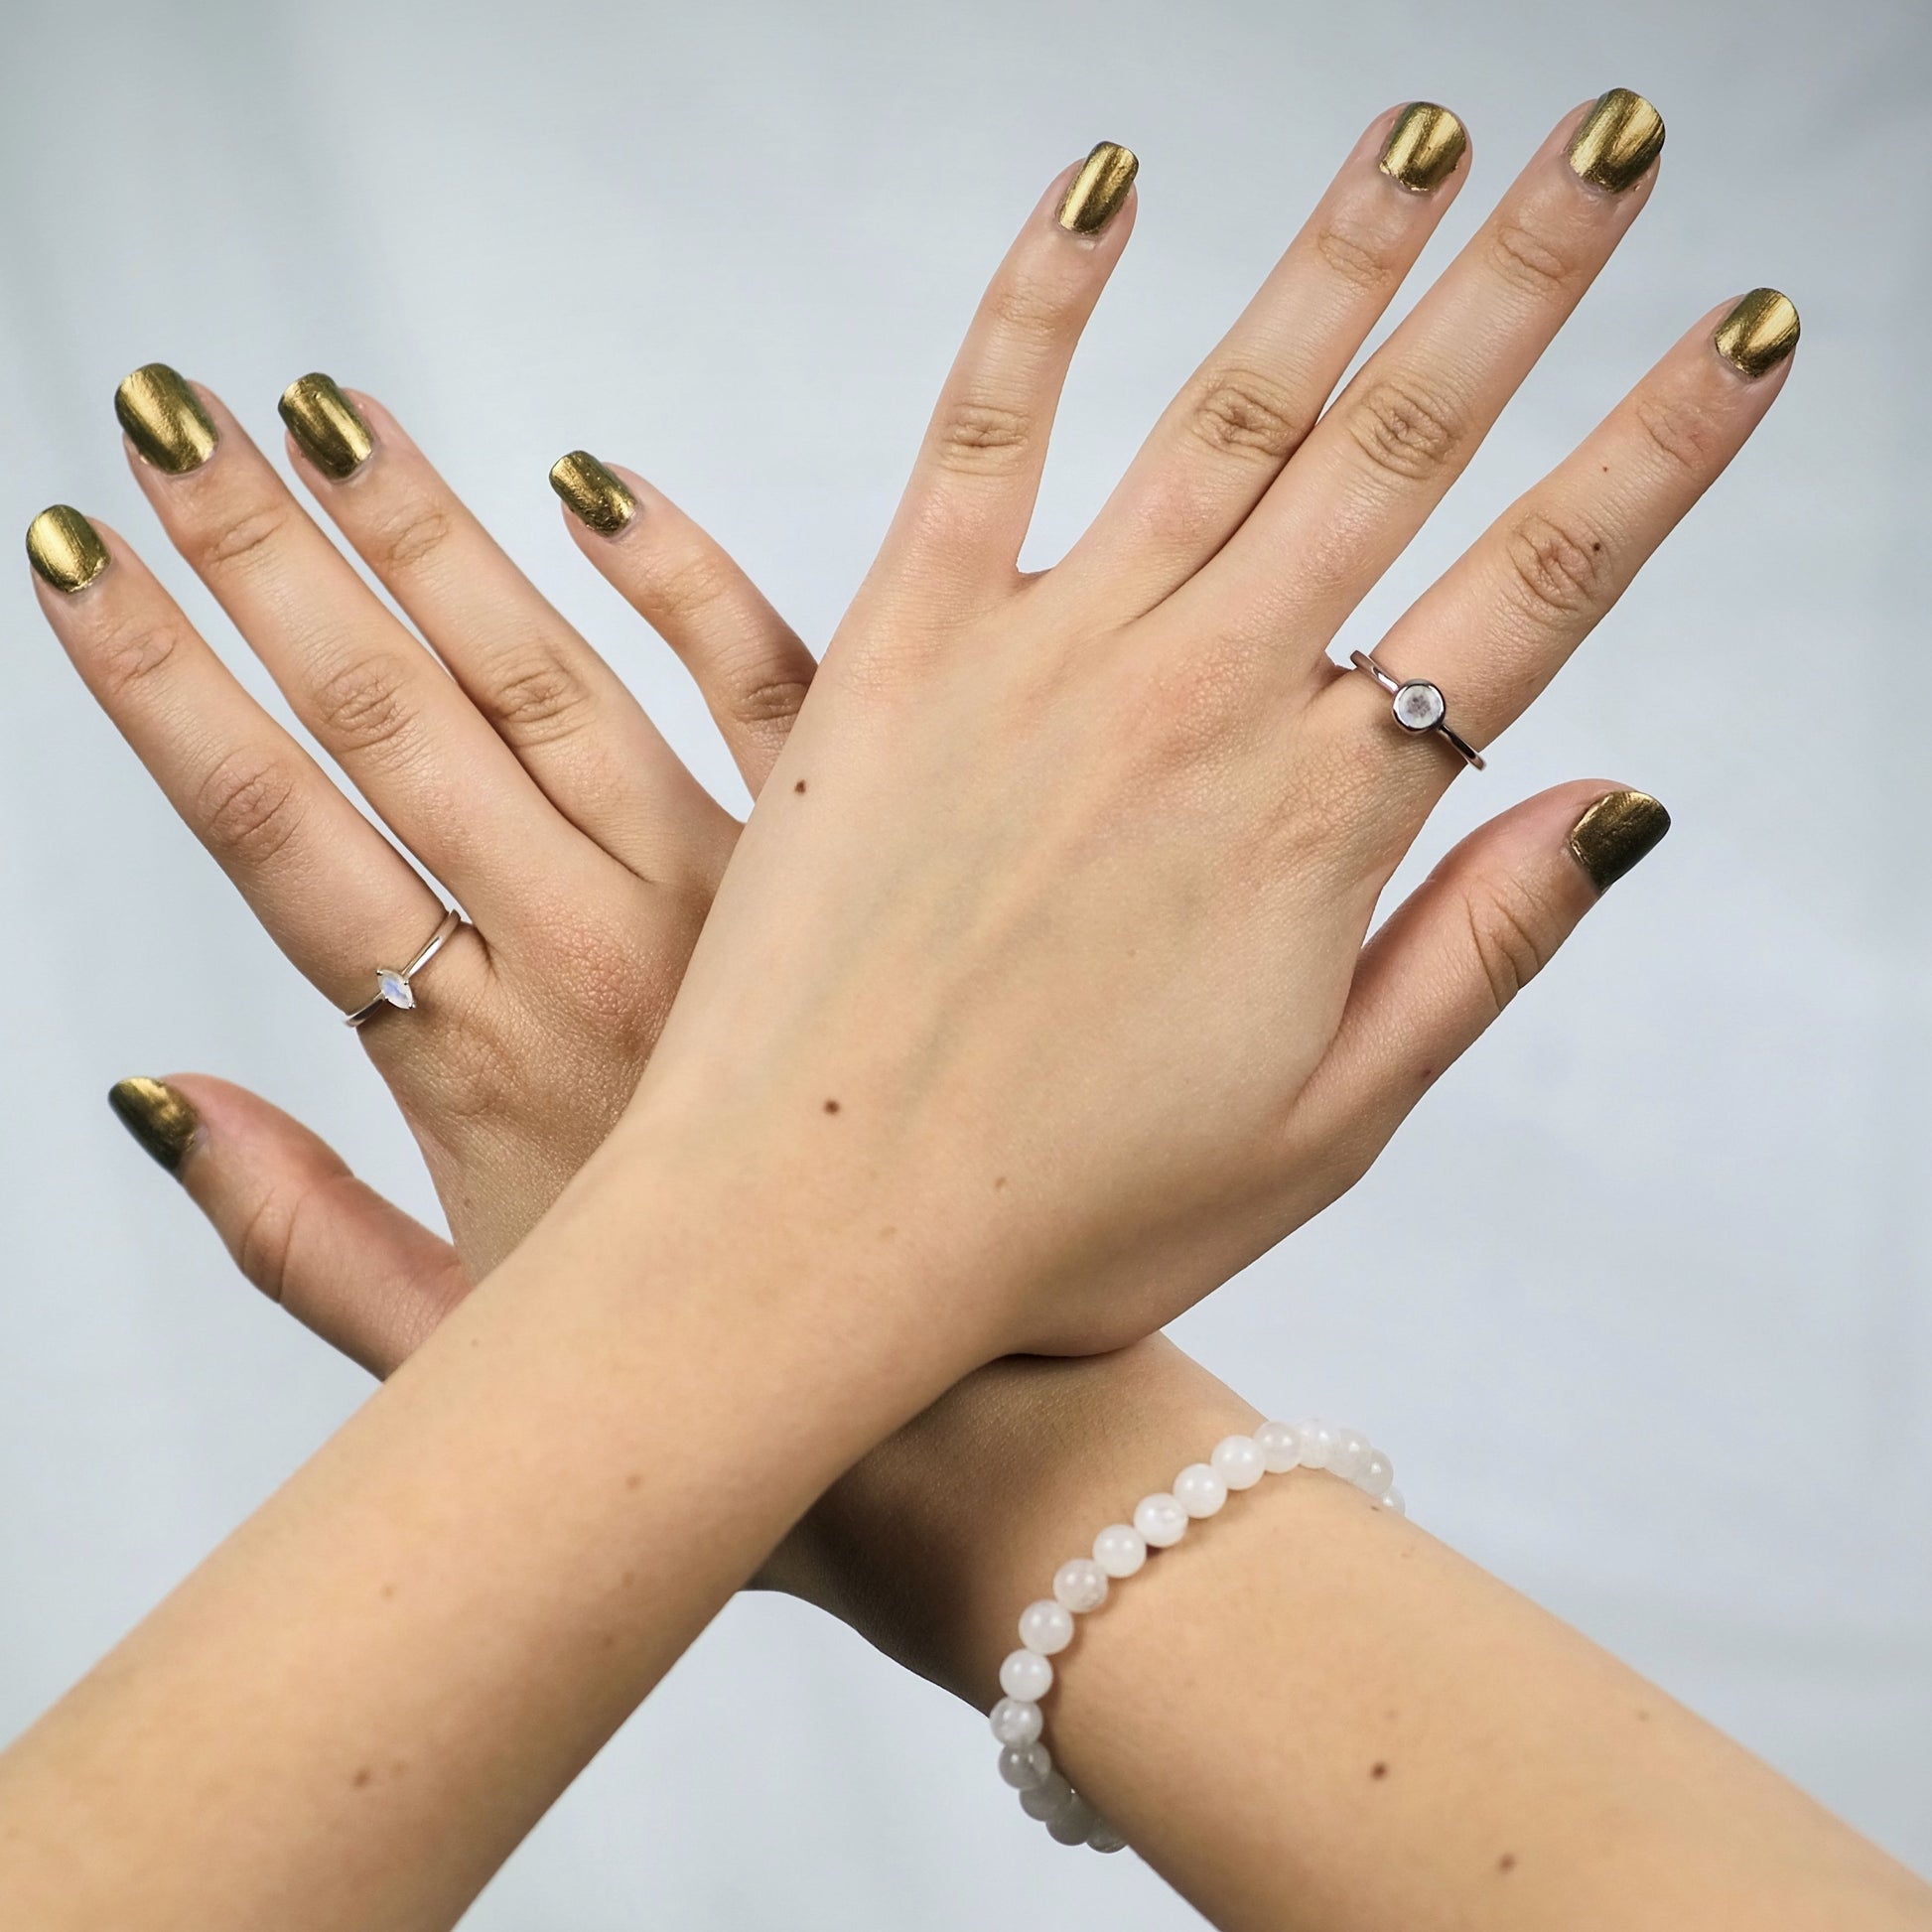 A model wearing moonstone gemstone rings and a bracelet